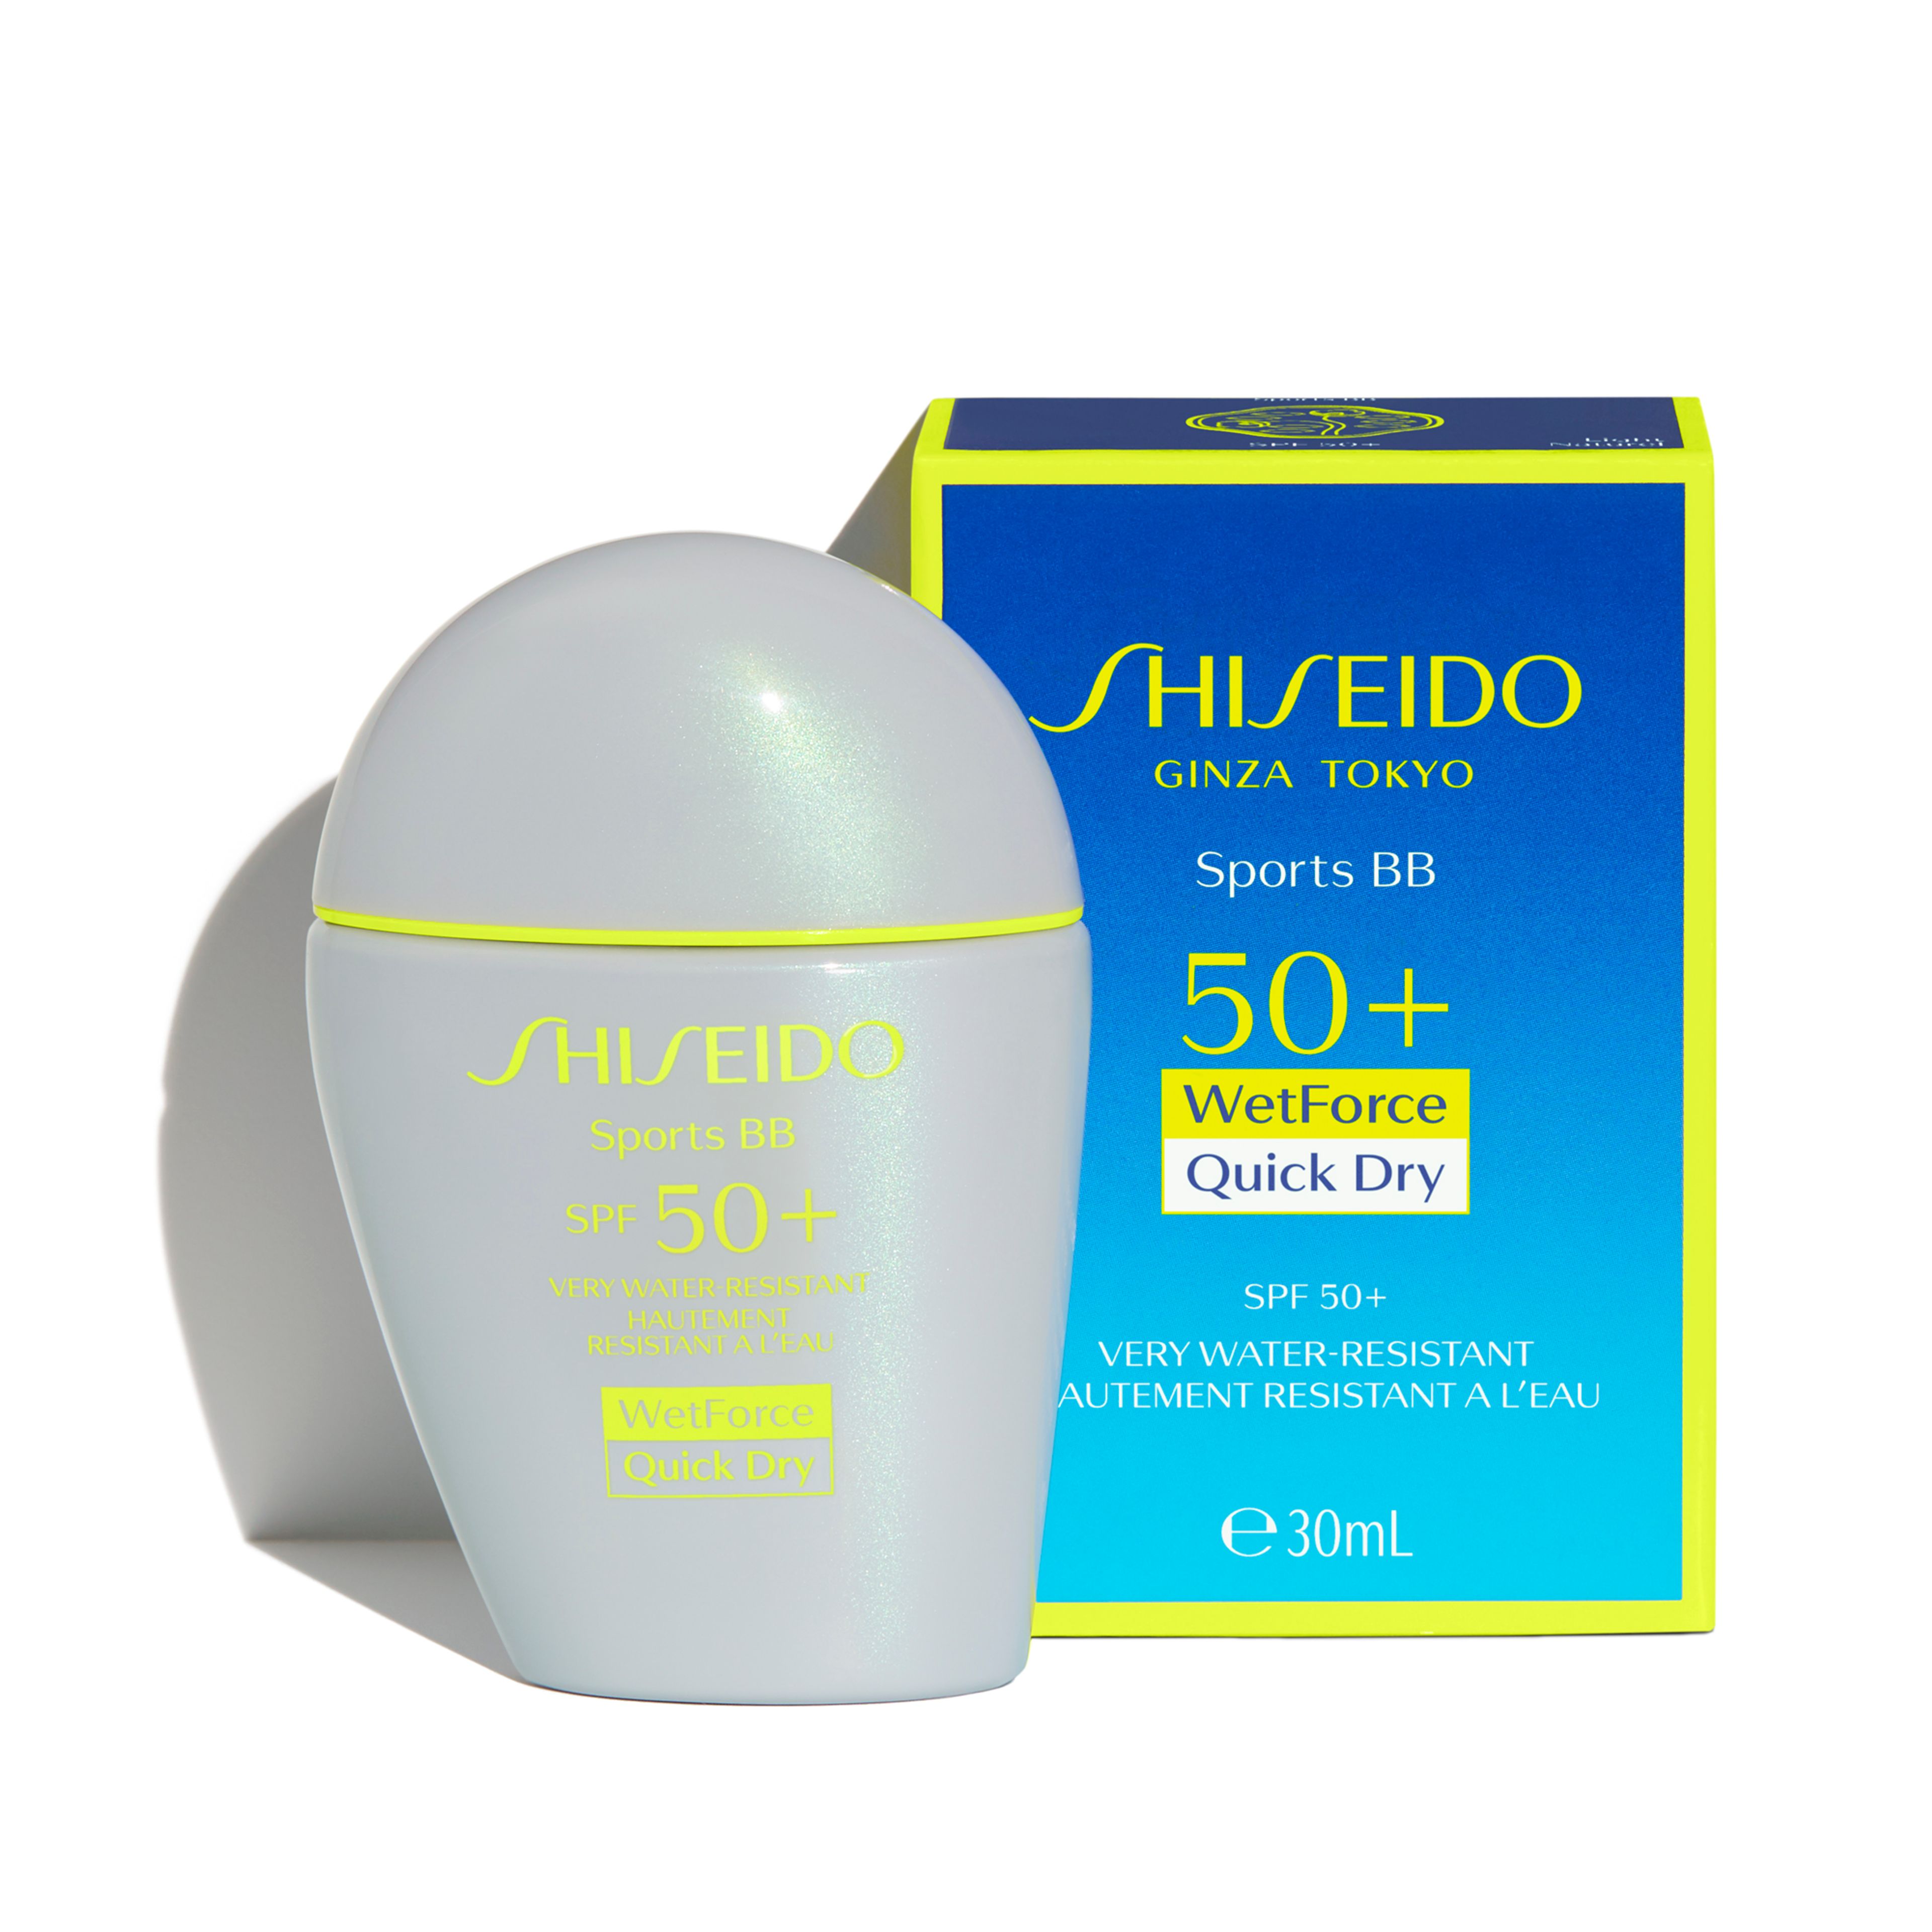 Shiseido Sports Bb Spf 50+ 3